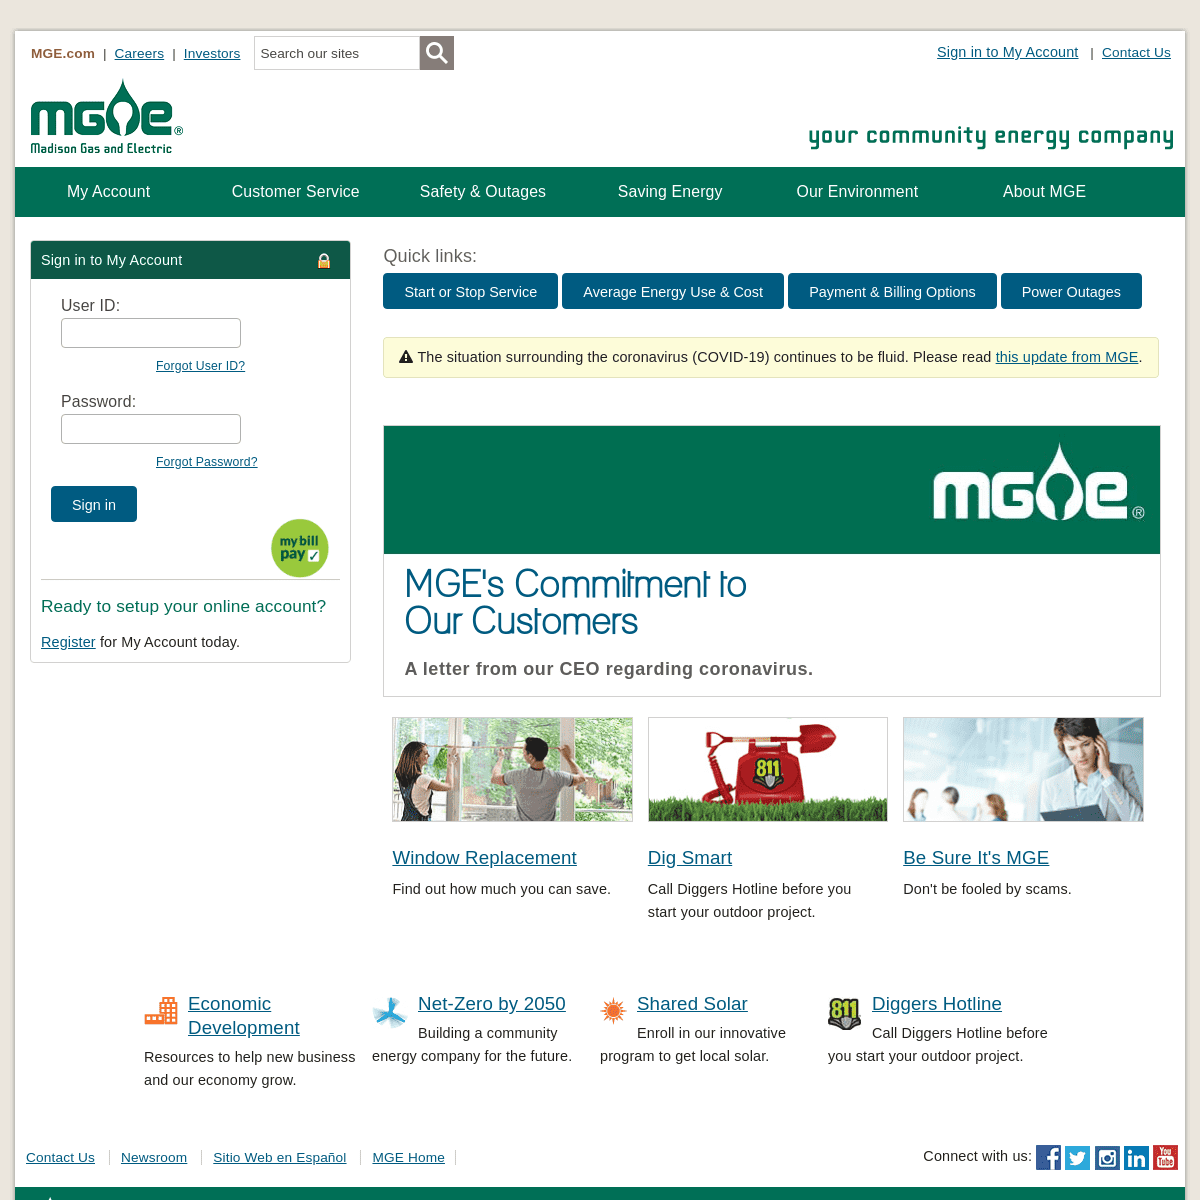 A complete backup of mge.com